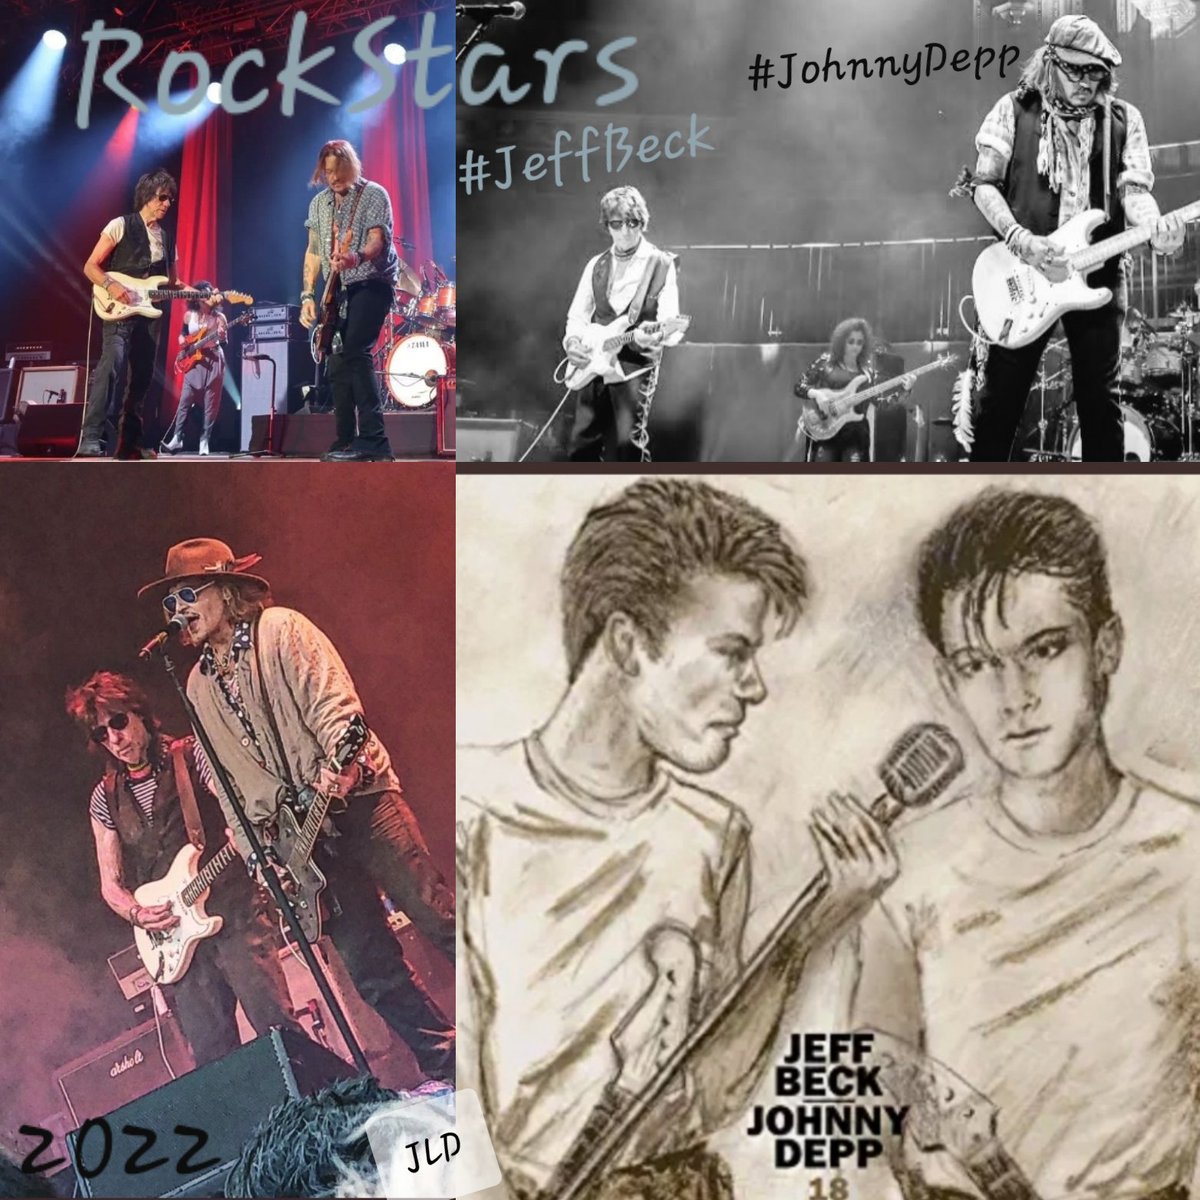 Legendary Jeff Beck's 2022 tour
w/Johnny Depp.🎸🎸
#RememberingJeffBeck
THIS & THAT
#thisandthat
#RIPJeffBeck #Legend
#RockStars #musicians
#JohnnyDepp #JeffBeck